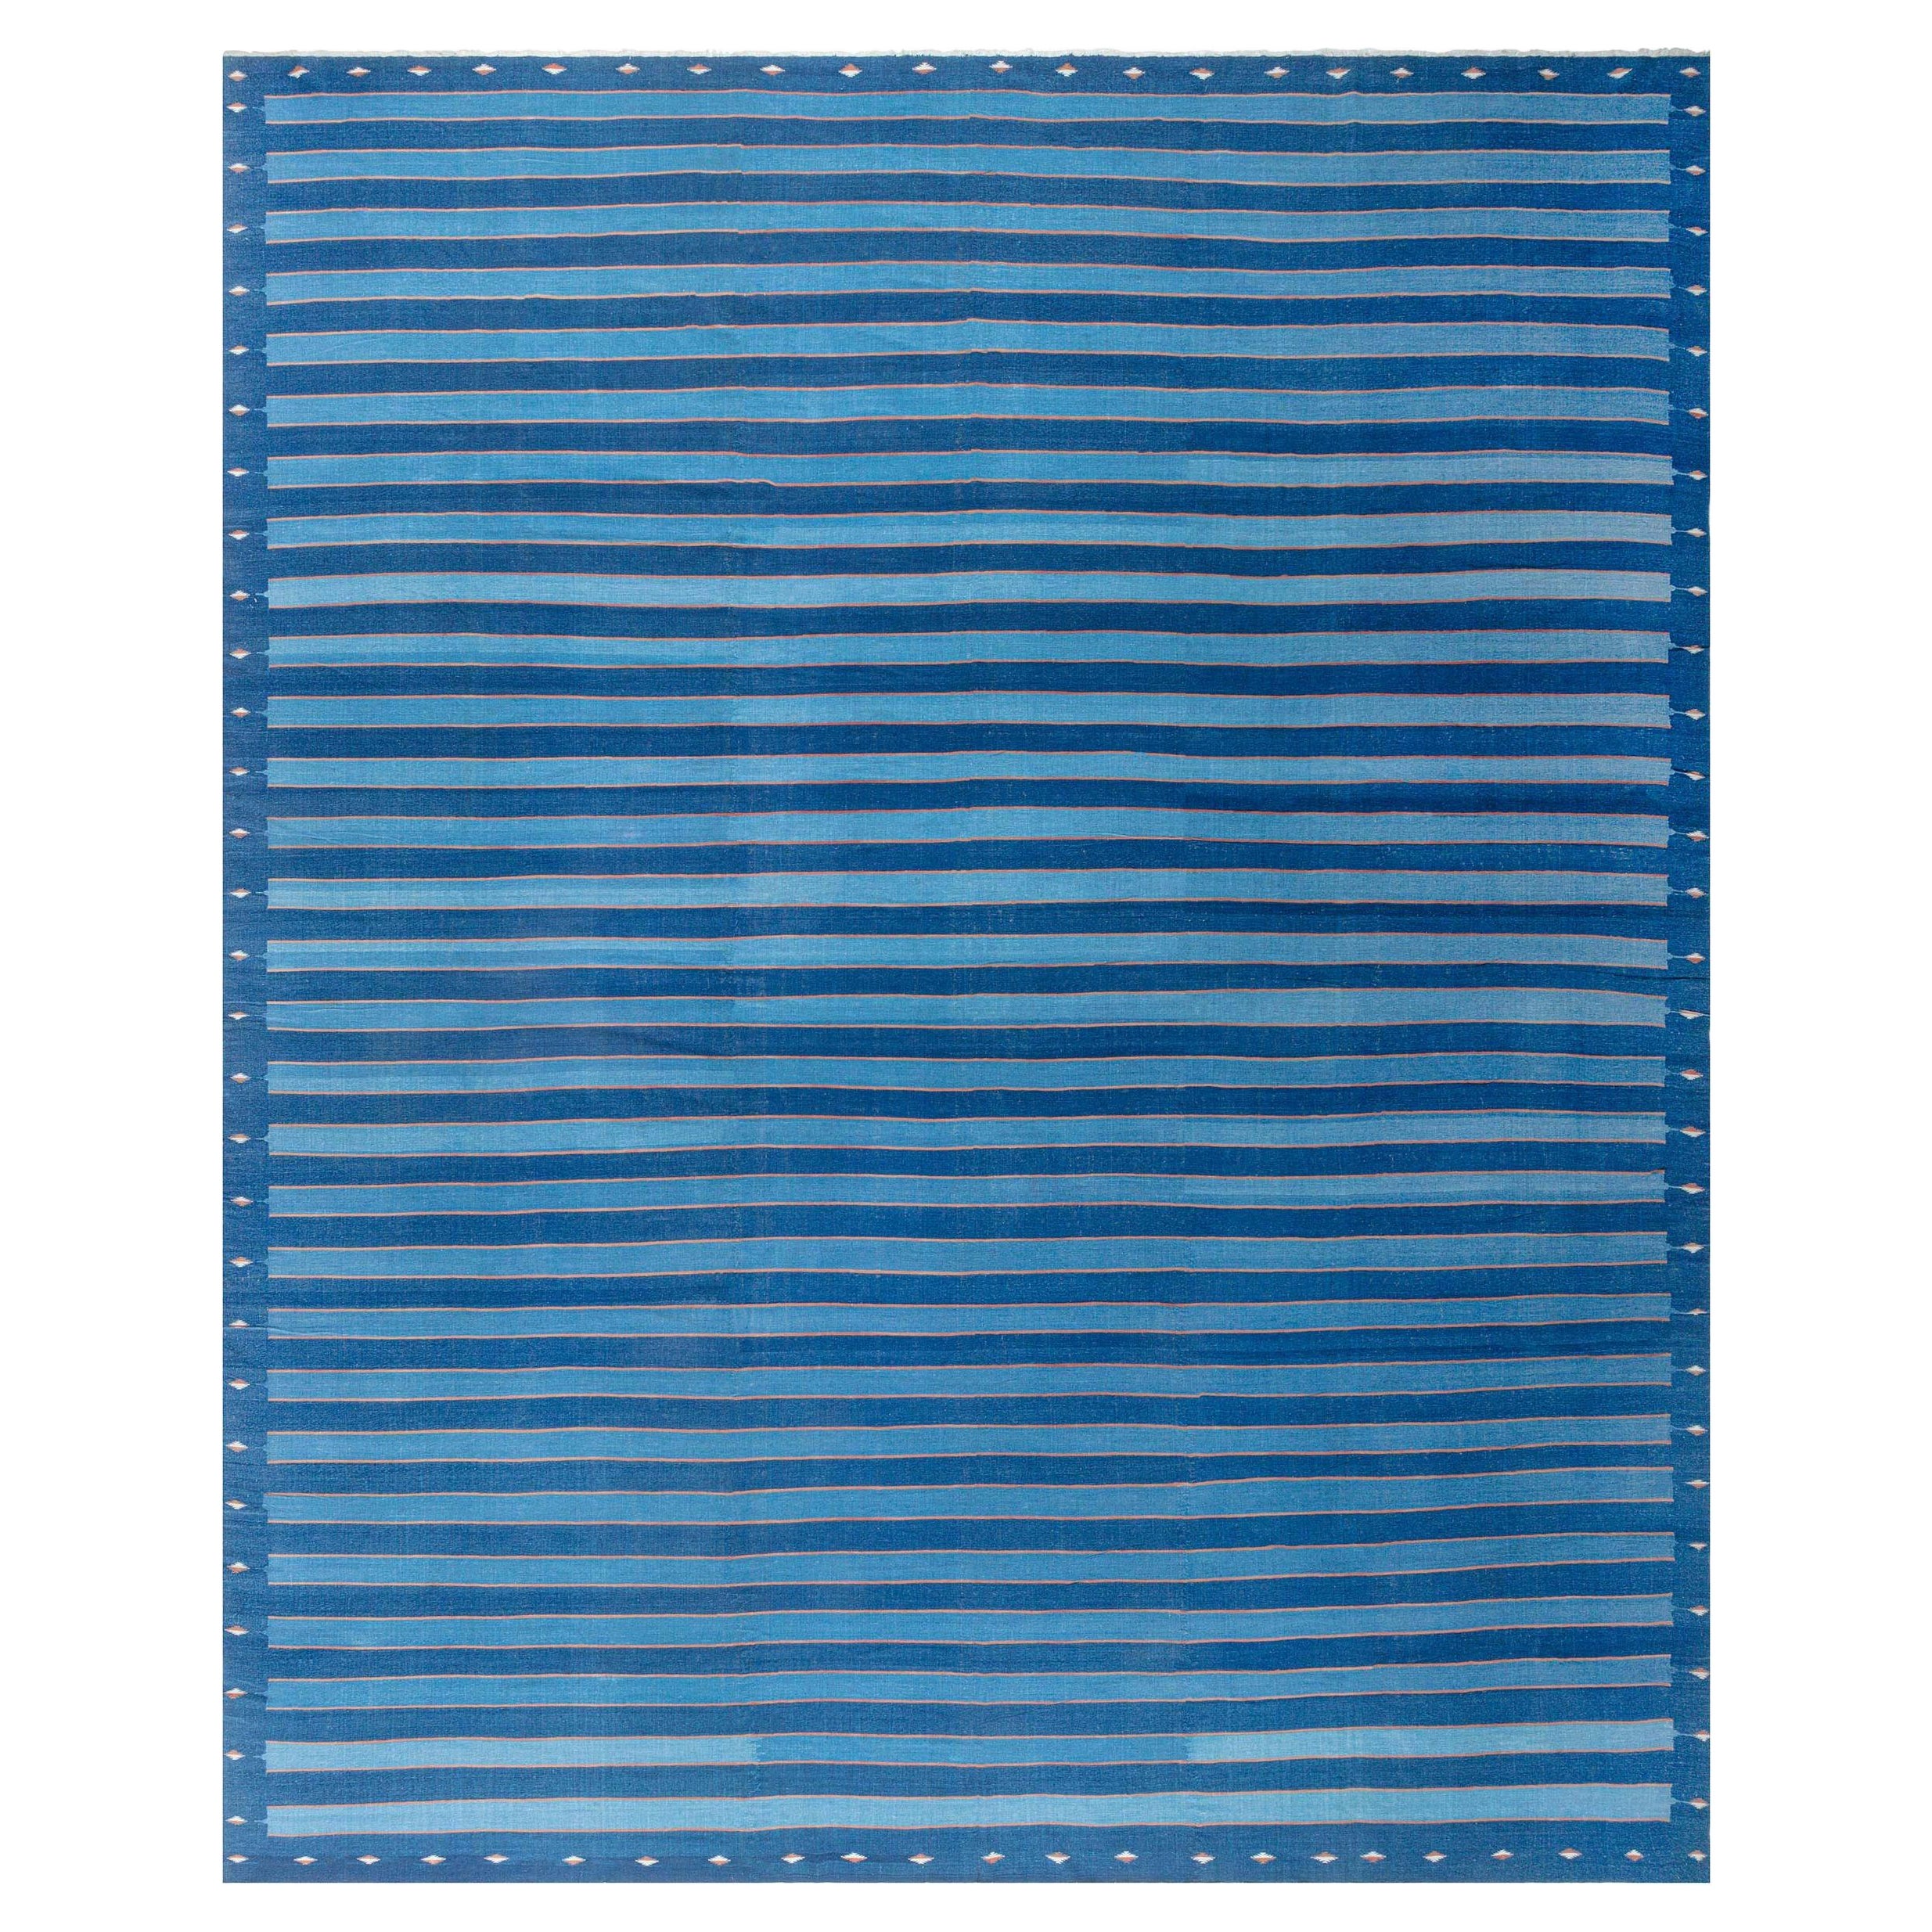 Vintage Indian Dhurrie Striped Blue Beige Rug